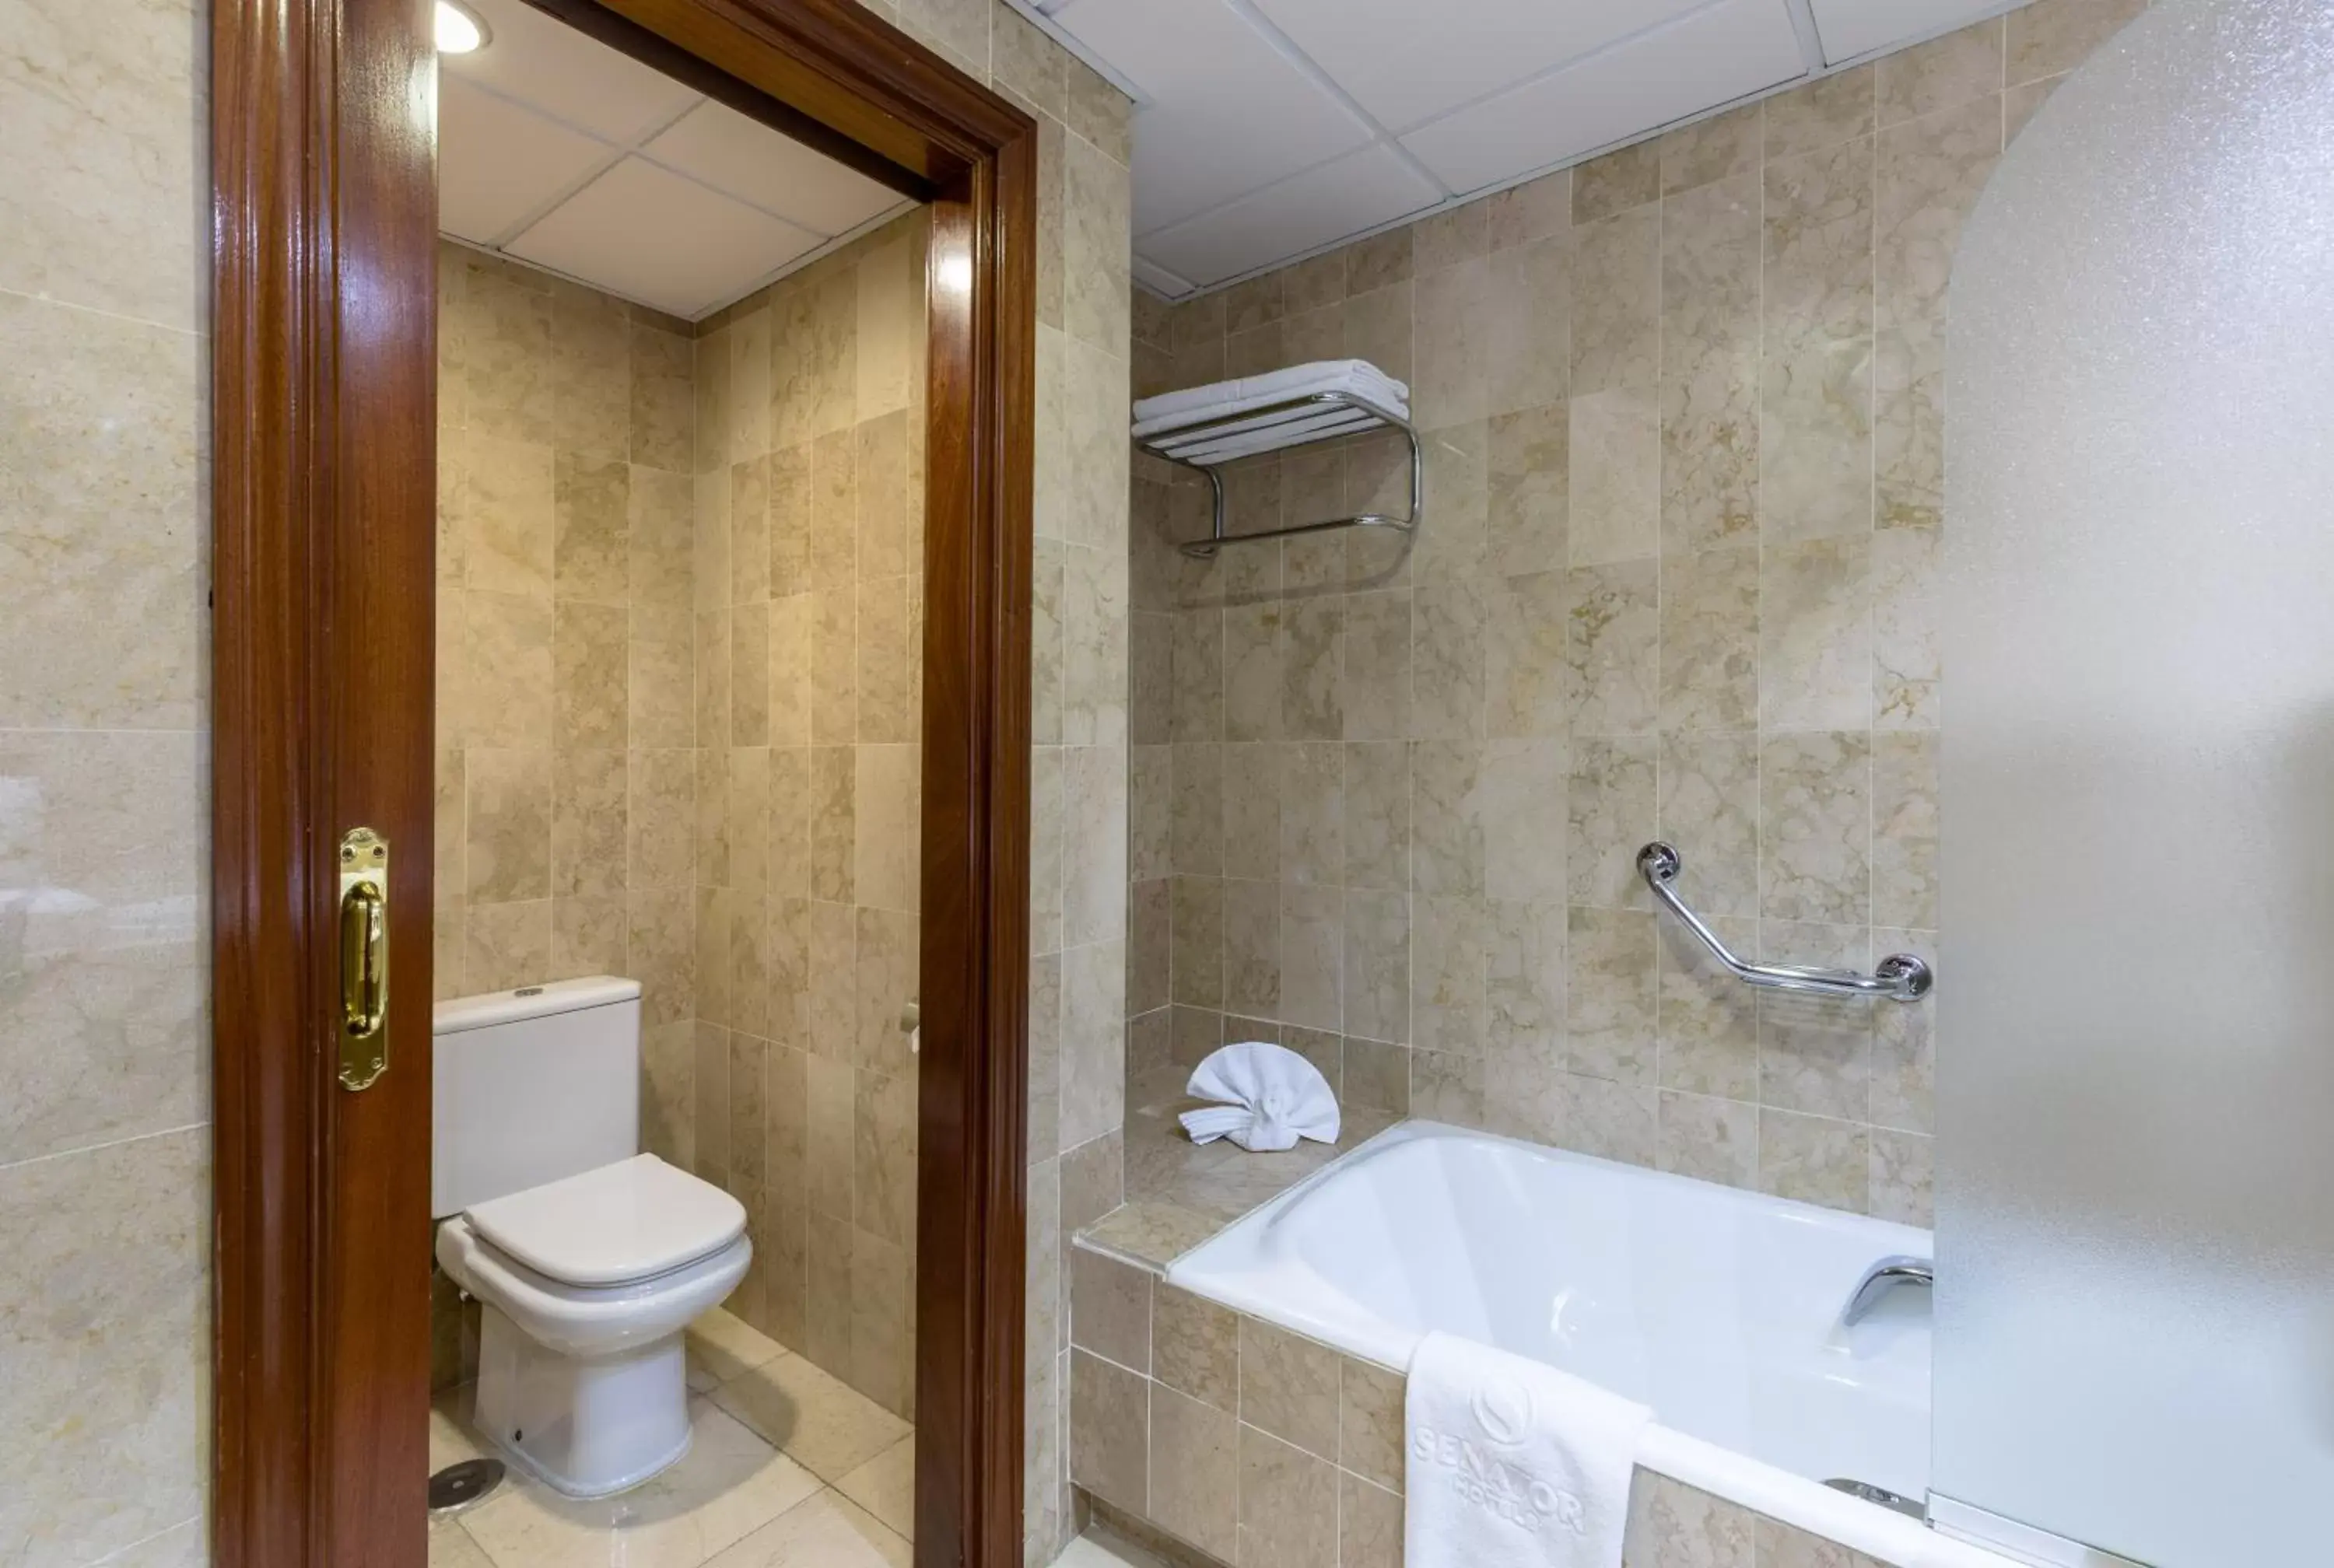 Toilet, Bathroom in Senator Huelva